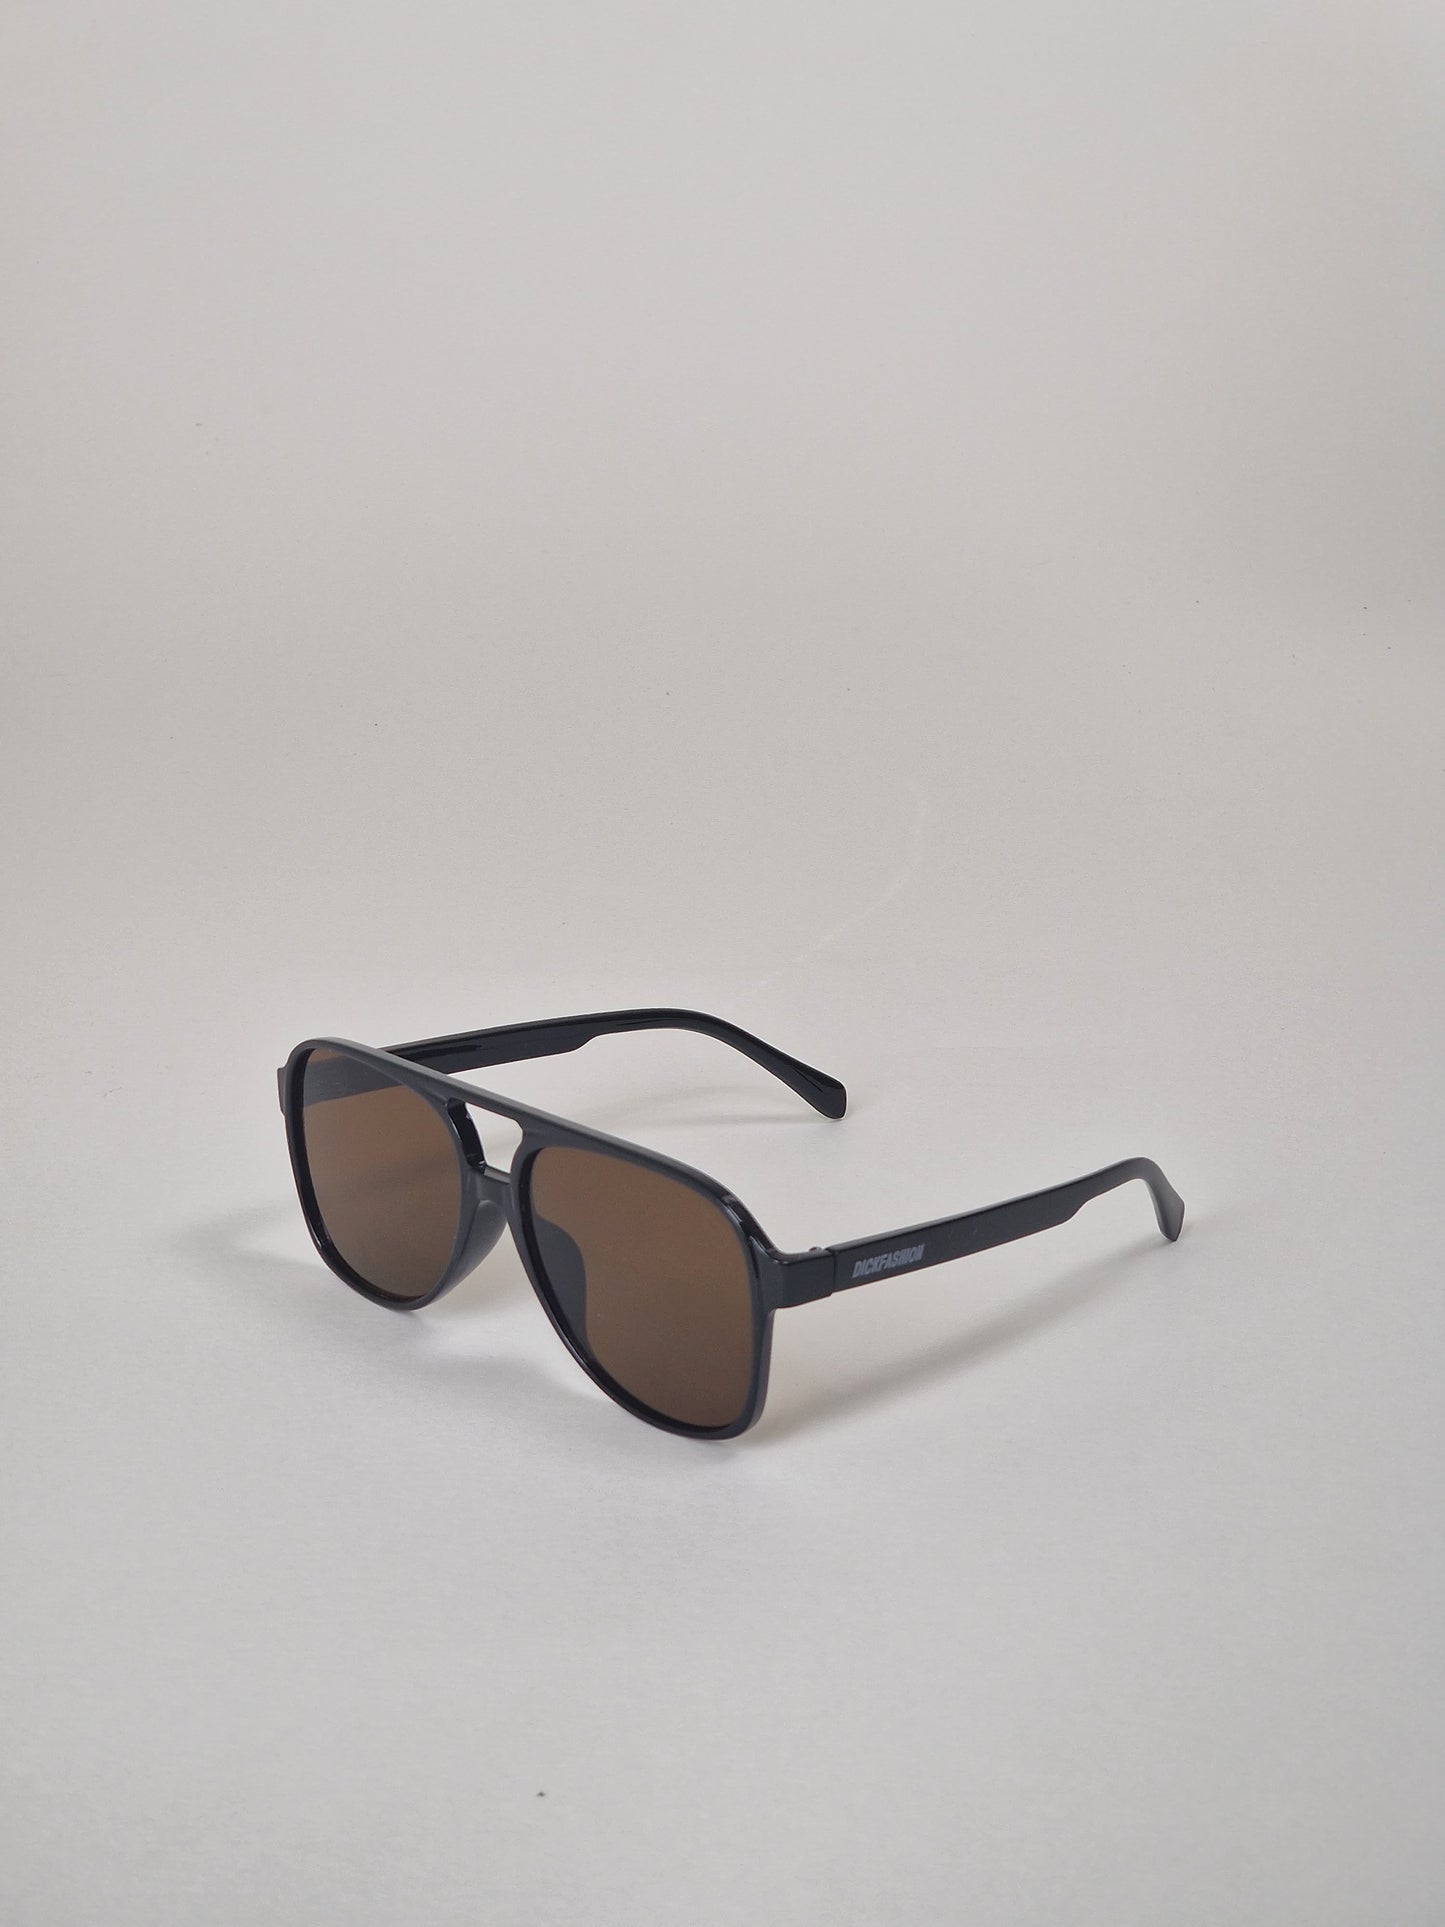 Sunglasses, model 47 - Brown tinted.